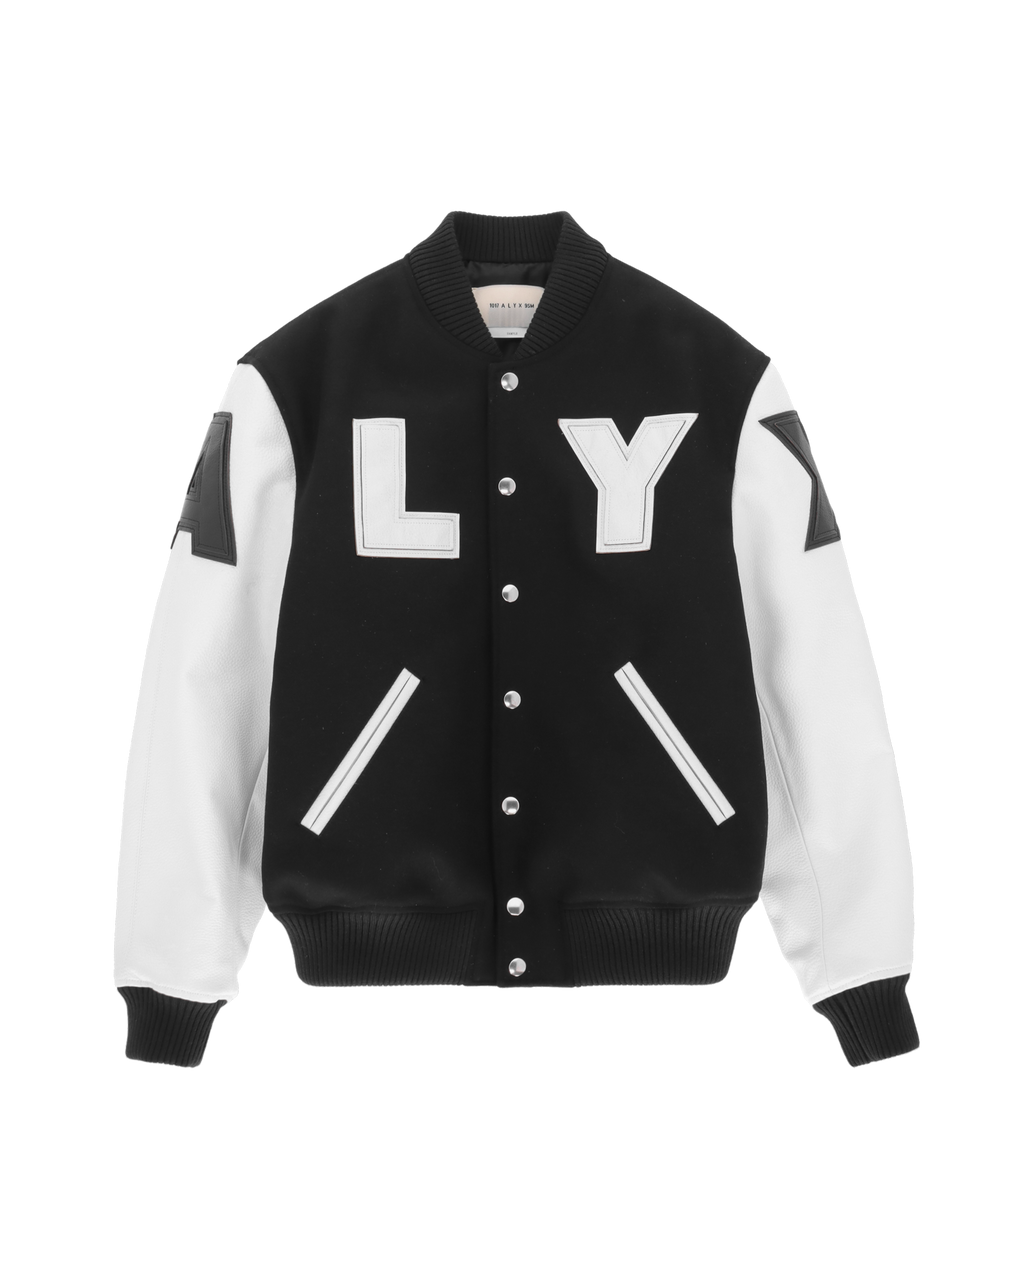 Sheep Skin Leather Varsity Jacket in Black and White